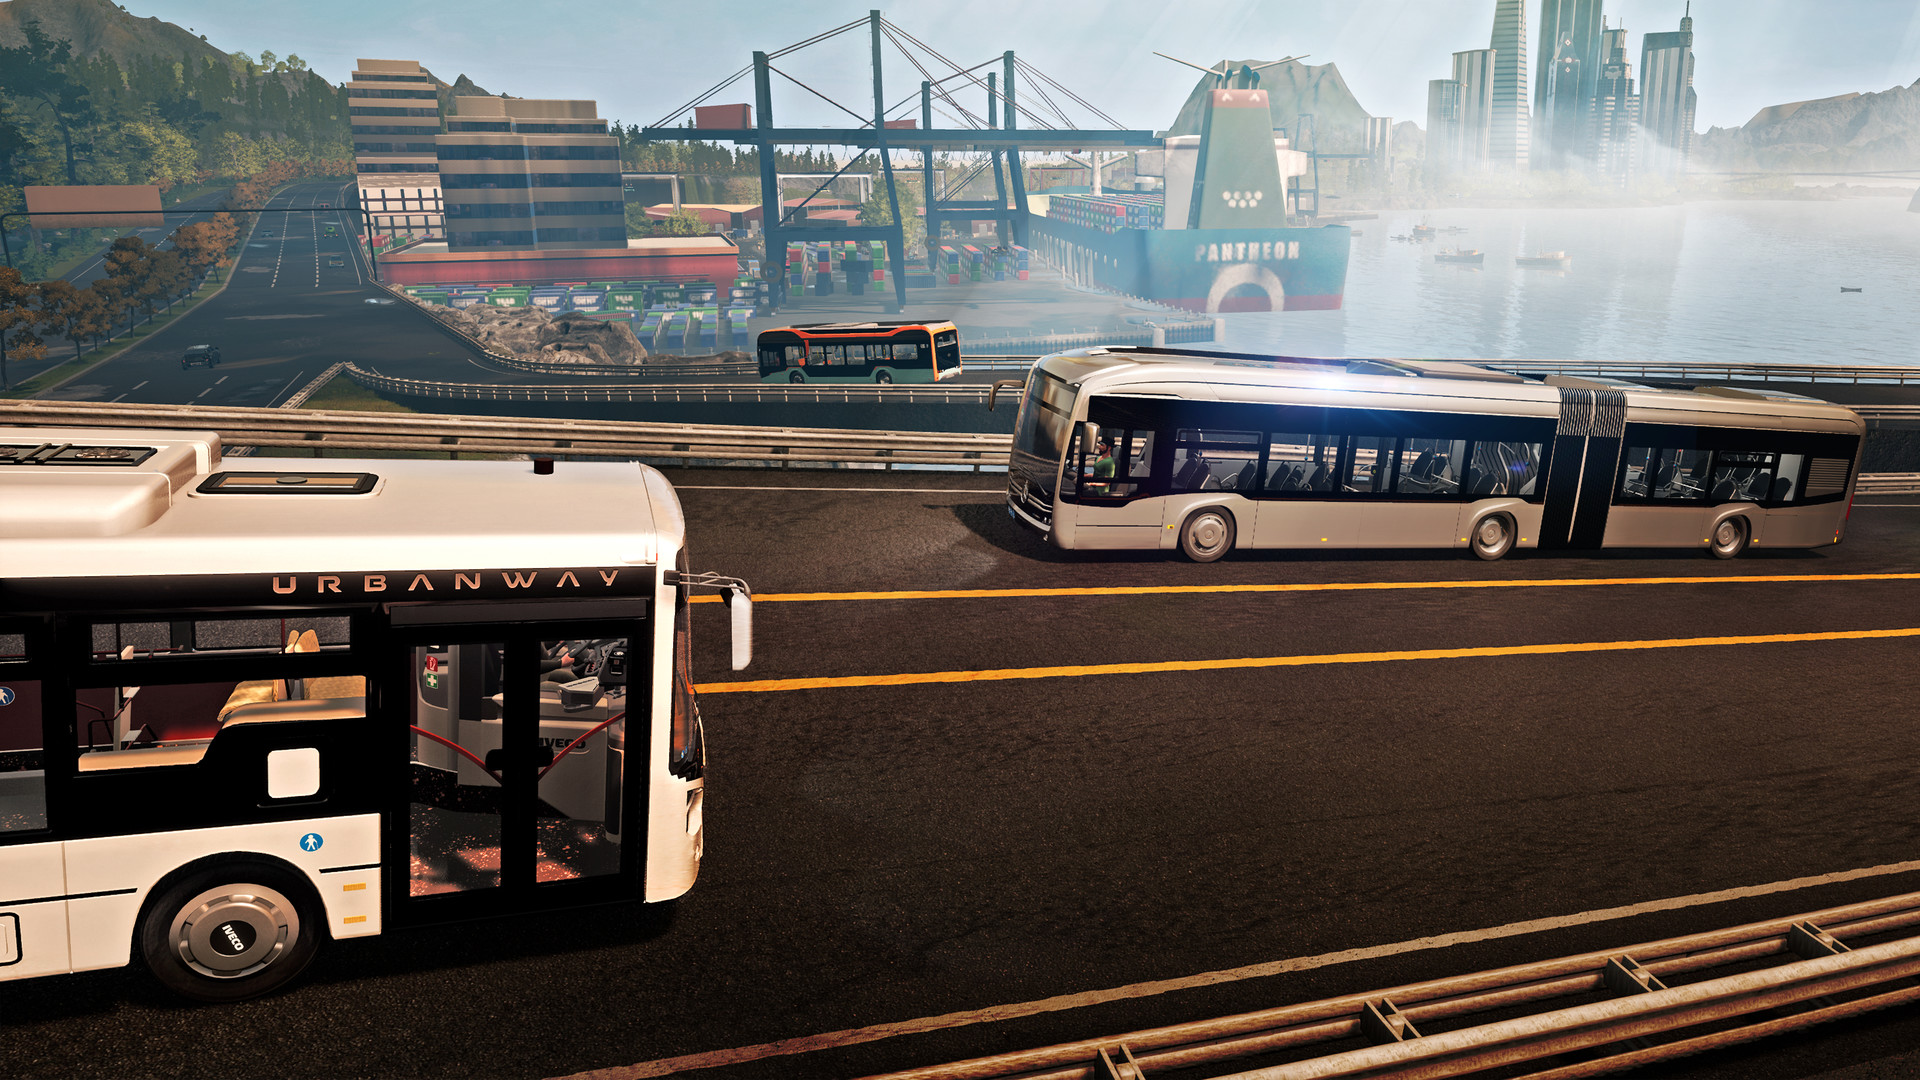 bus simulator 21 release date xbox one